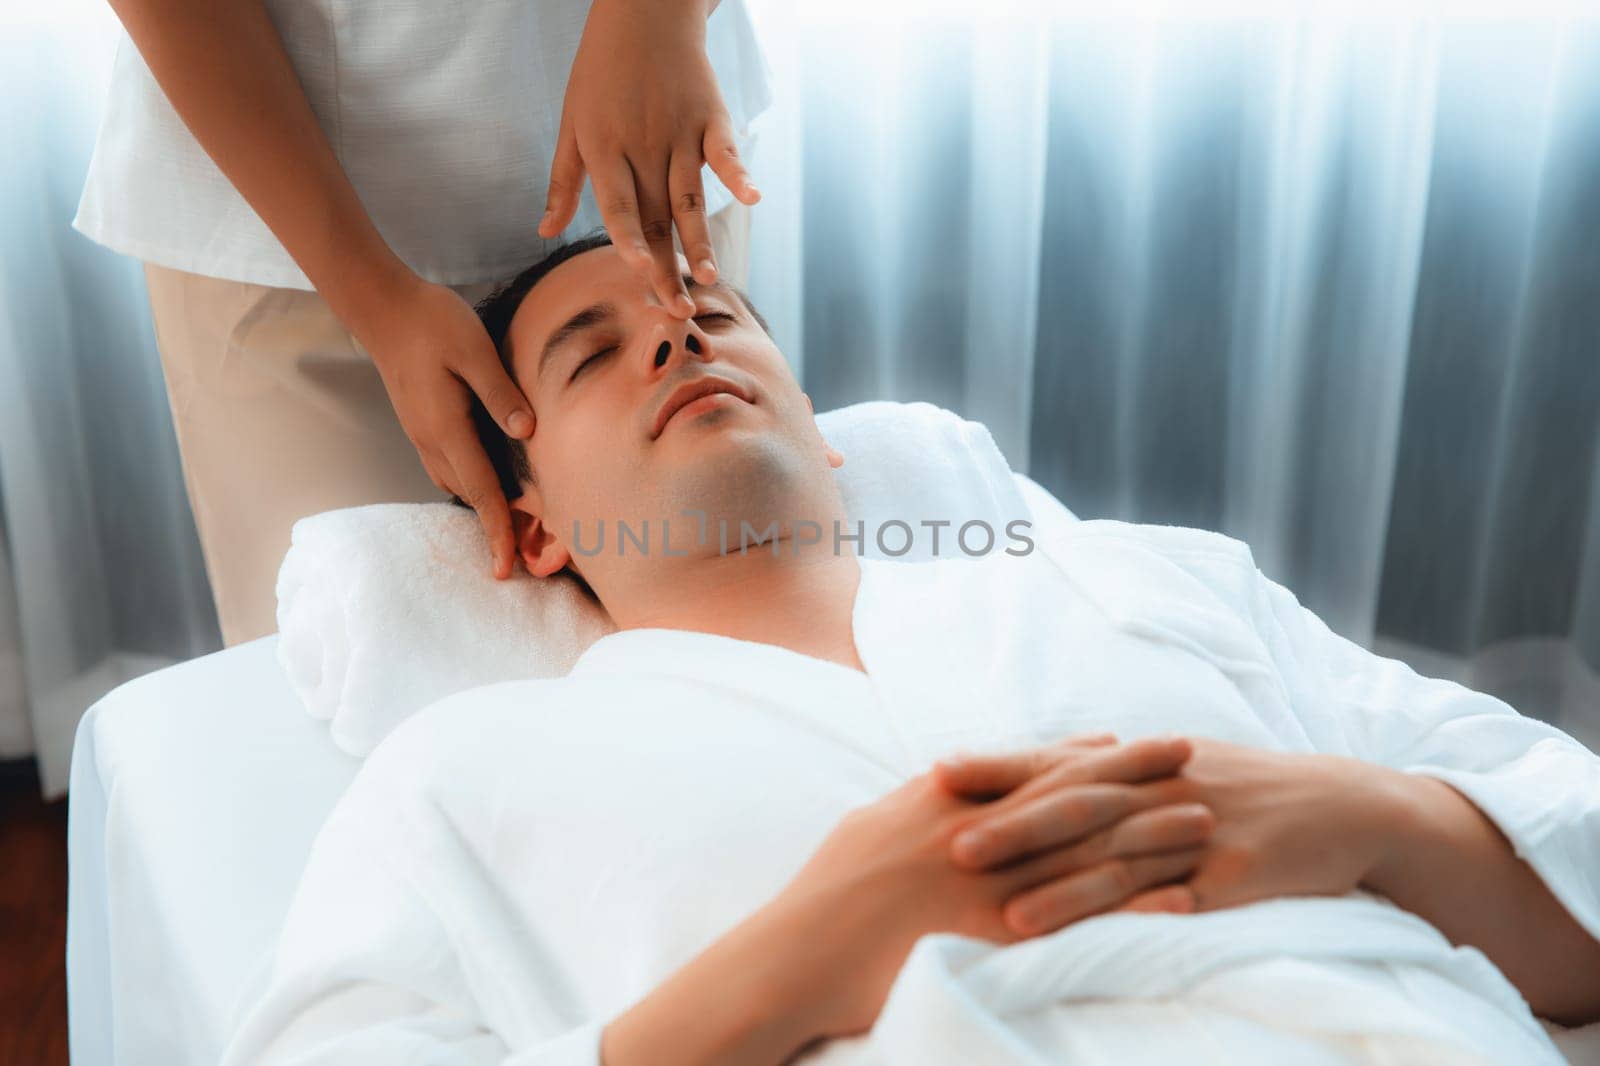 Caucasian man enjoying relaxing anti-stress head massage. Quiescent by biancoblue